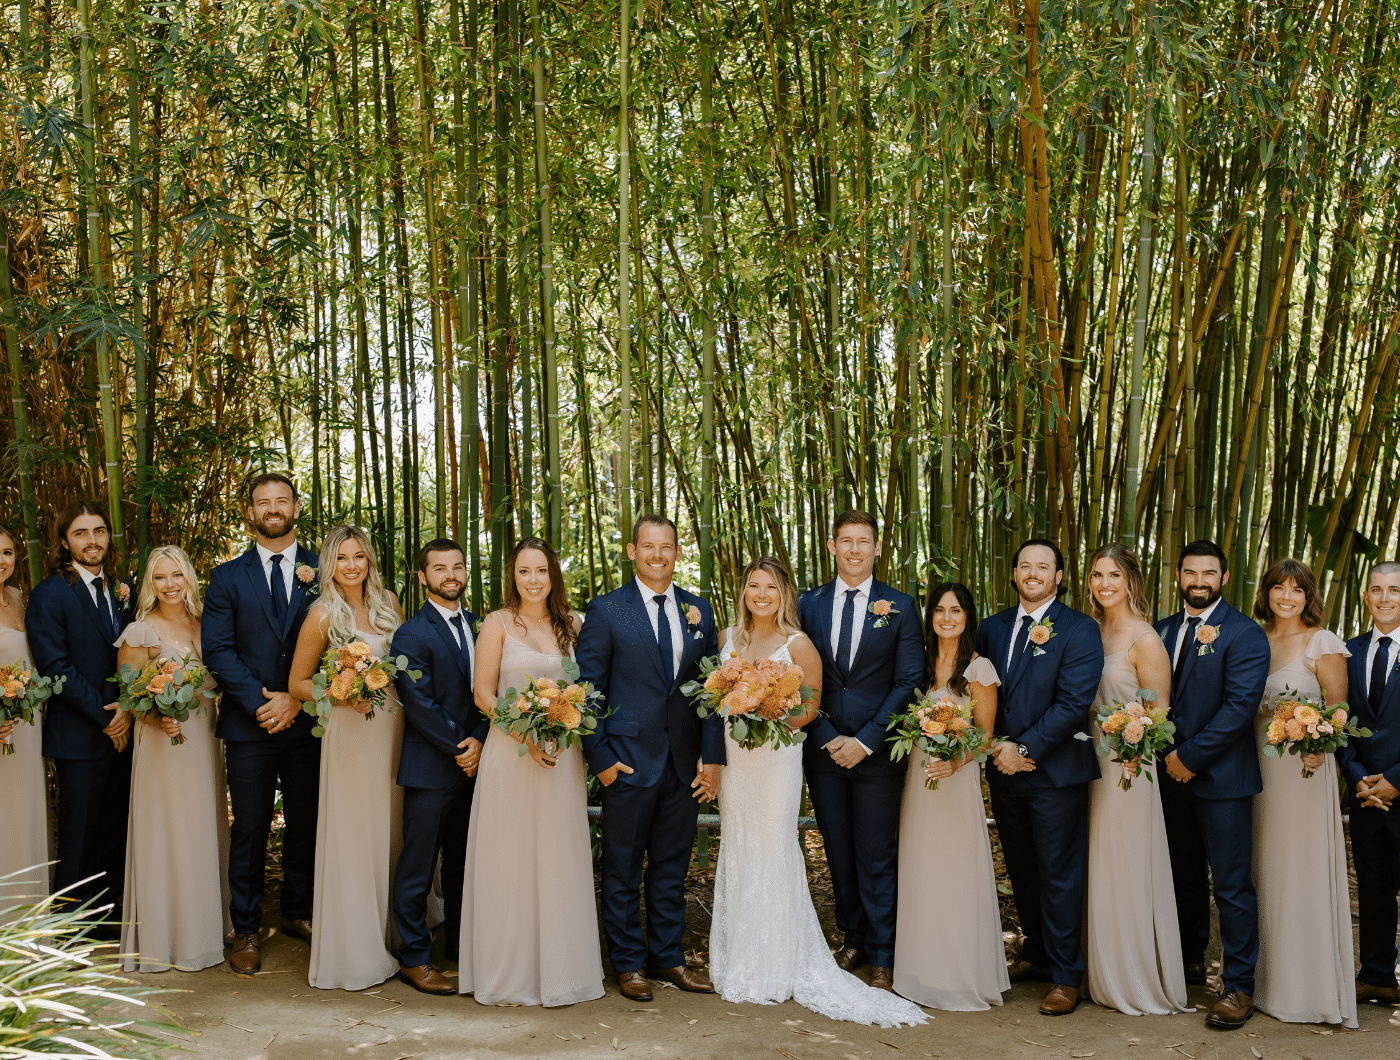 Wedding pary against tall bamboo